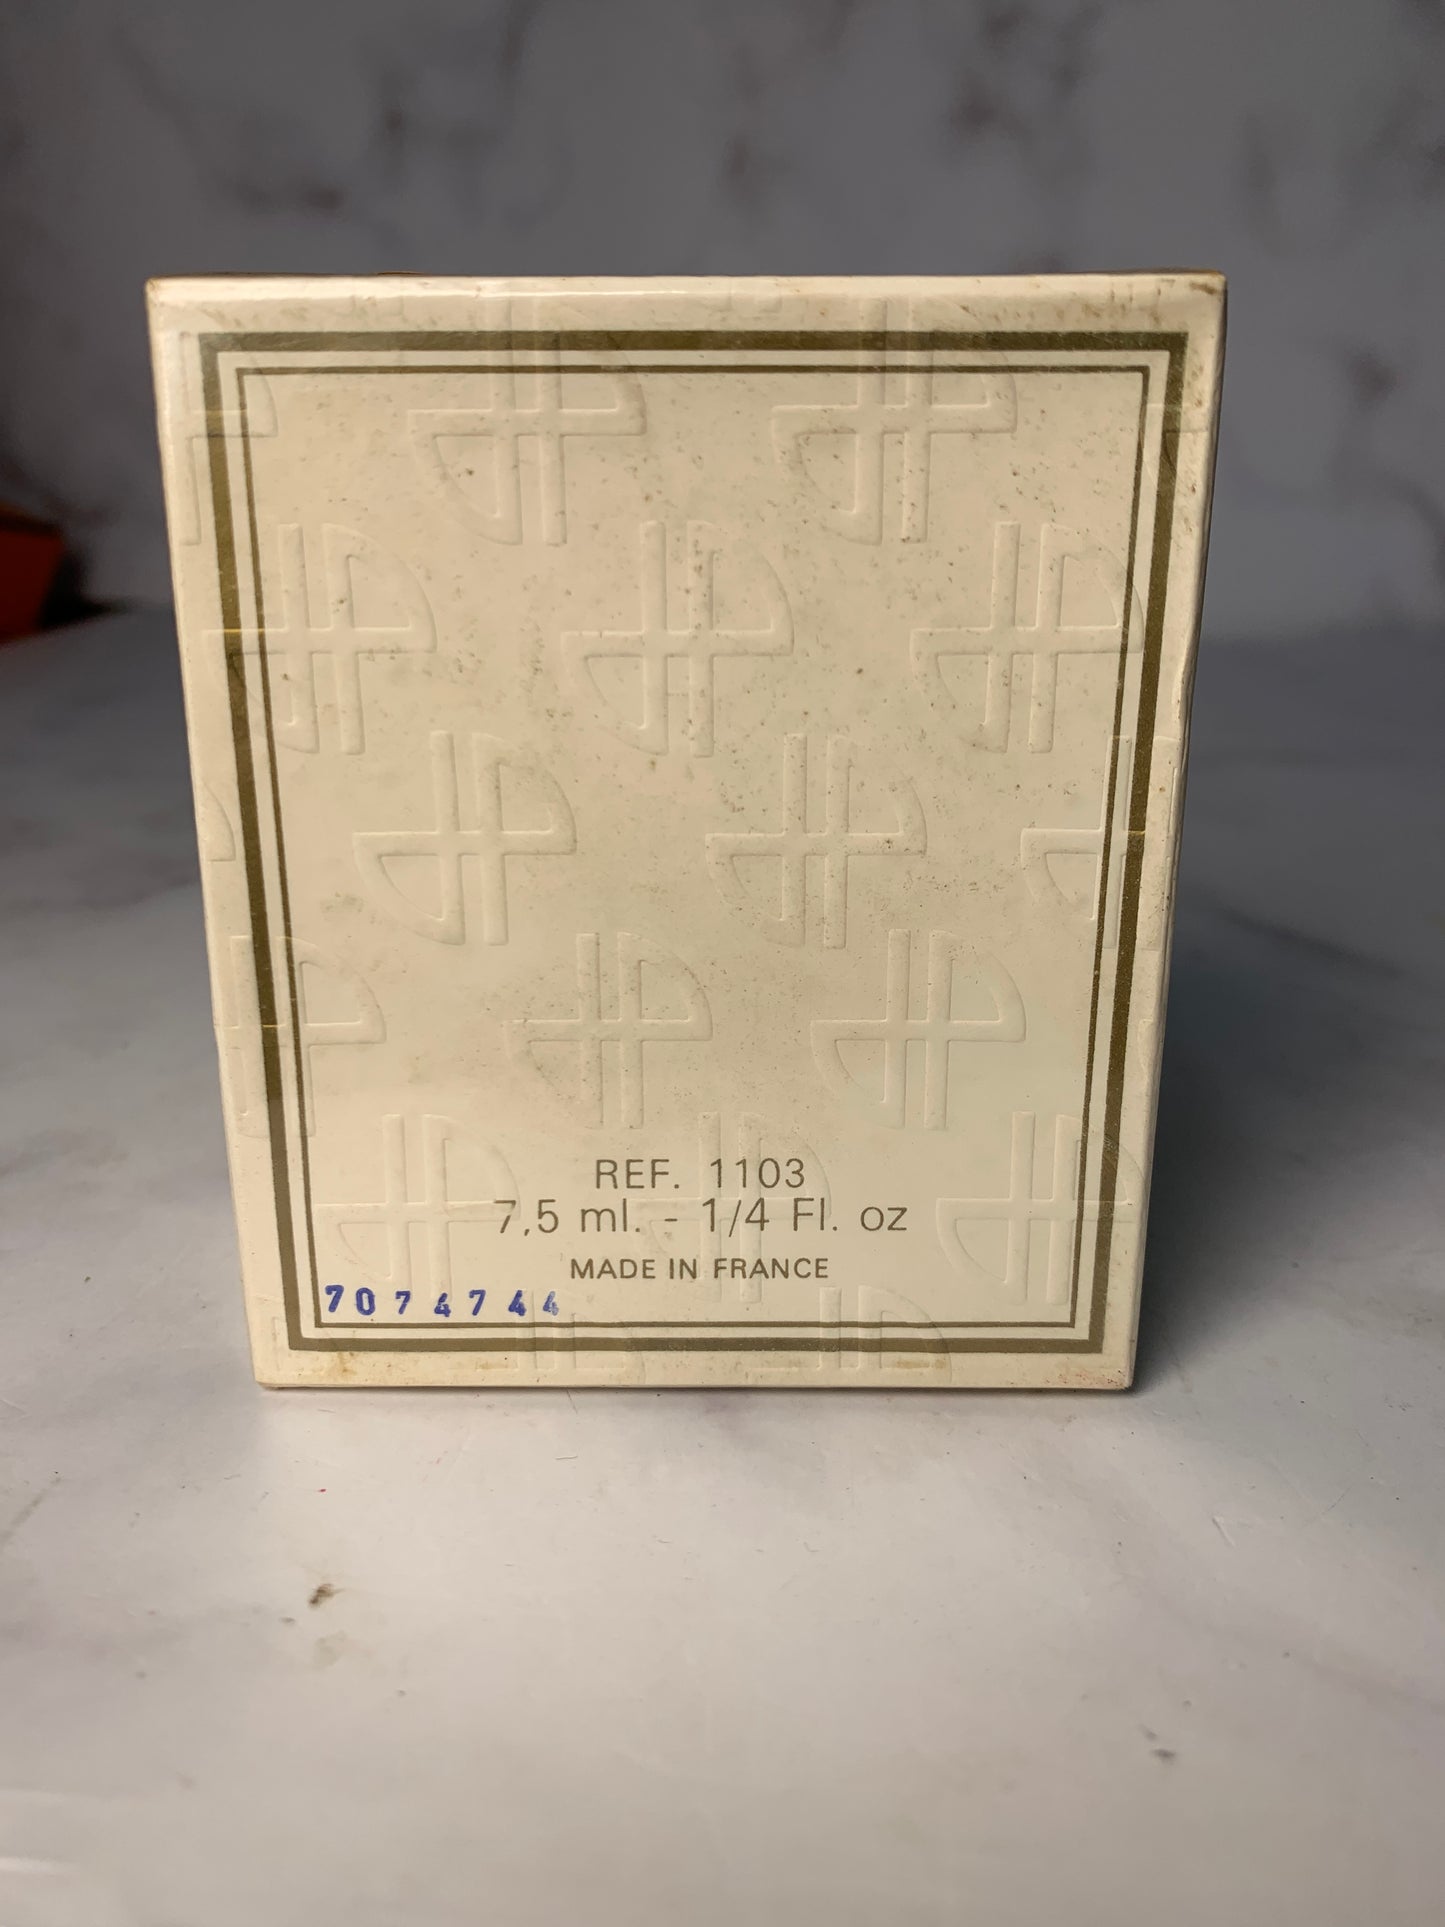 Rare Jean Patou Joy 7 ml 1/4 oz Perfume  Parfum with box - 030124